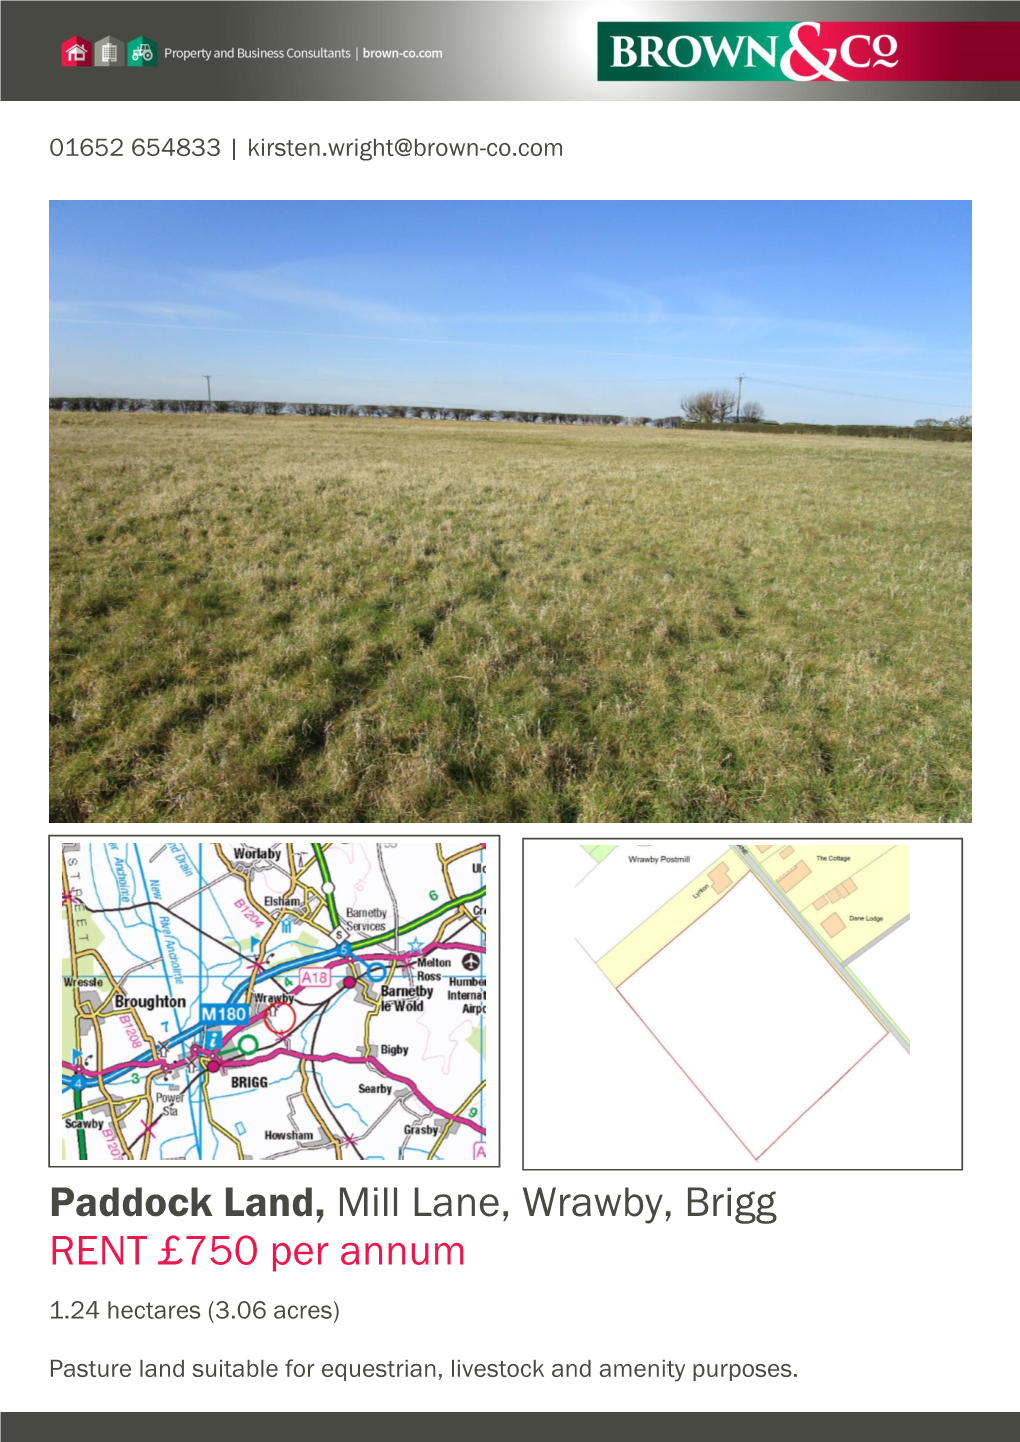 Paddock Land, Mill Lane, Wrawby, Brigg RENT £750 Per Annum 1.24 Hectares (3.06 Acres)